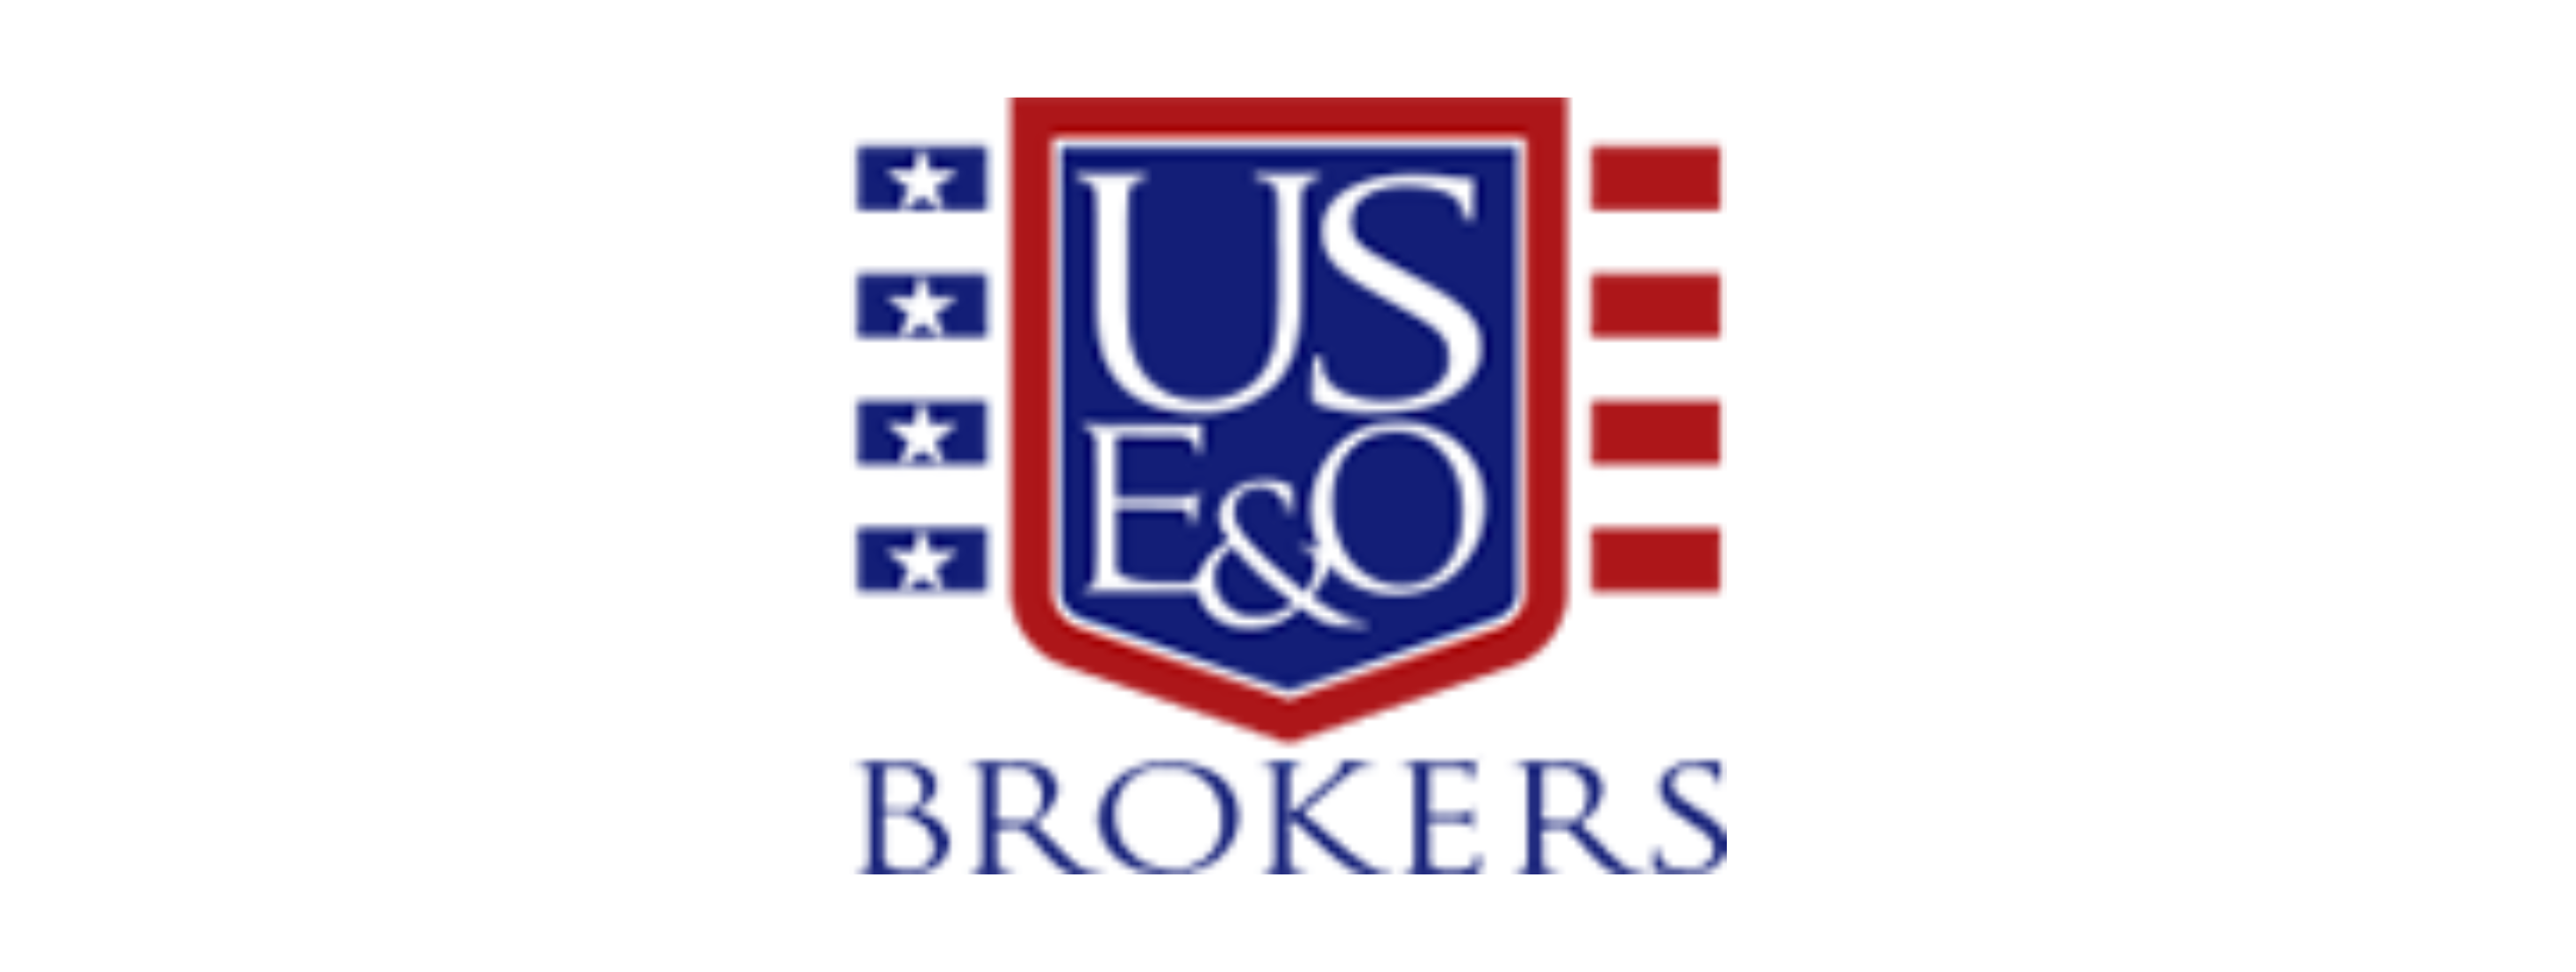 U.S. E & O Brokers